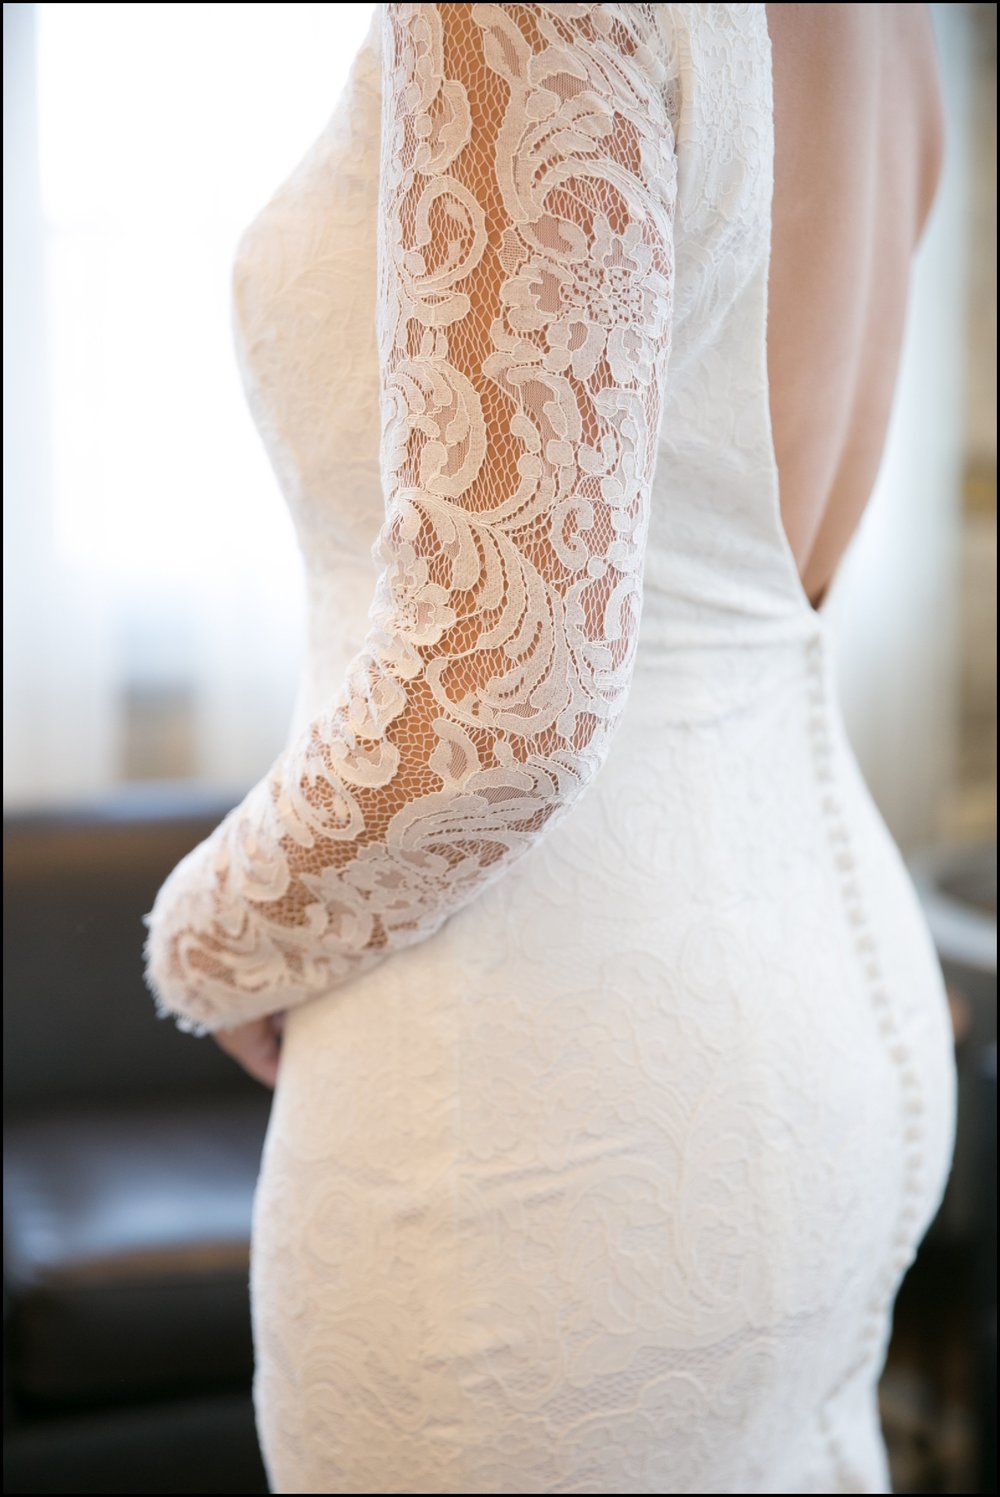  Wedding dress detail 